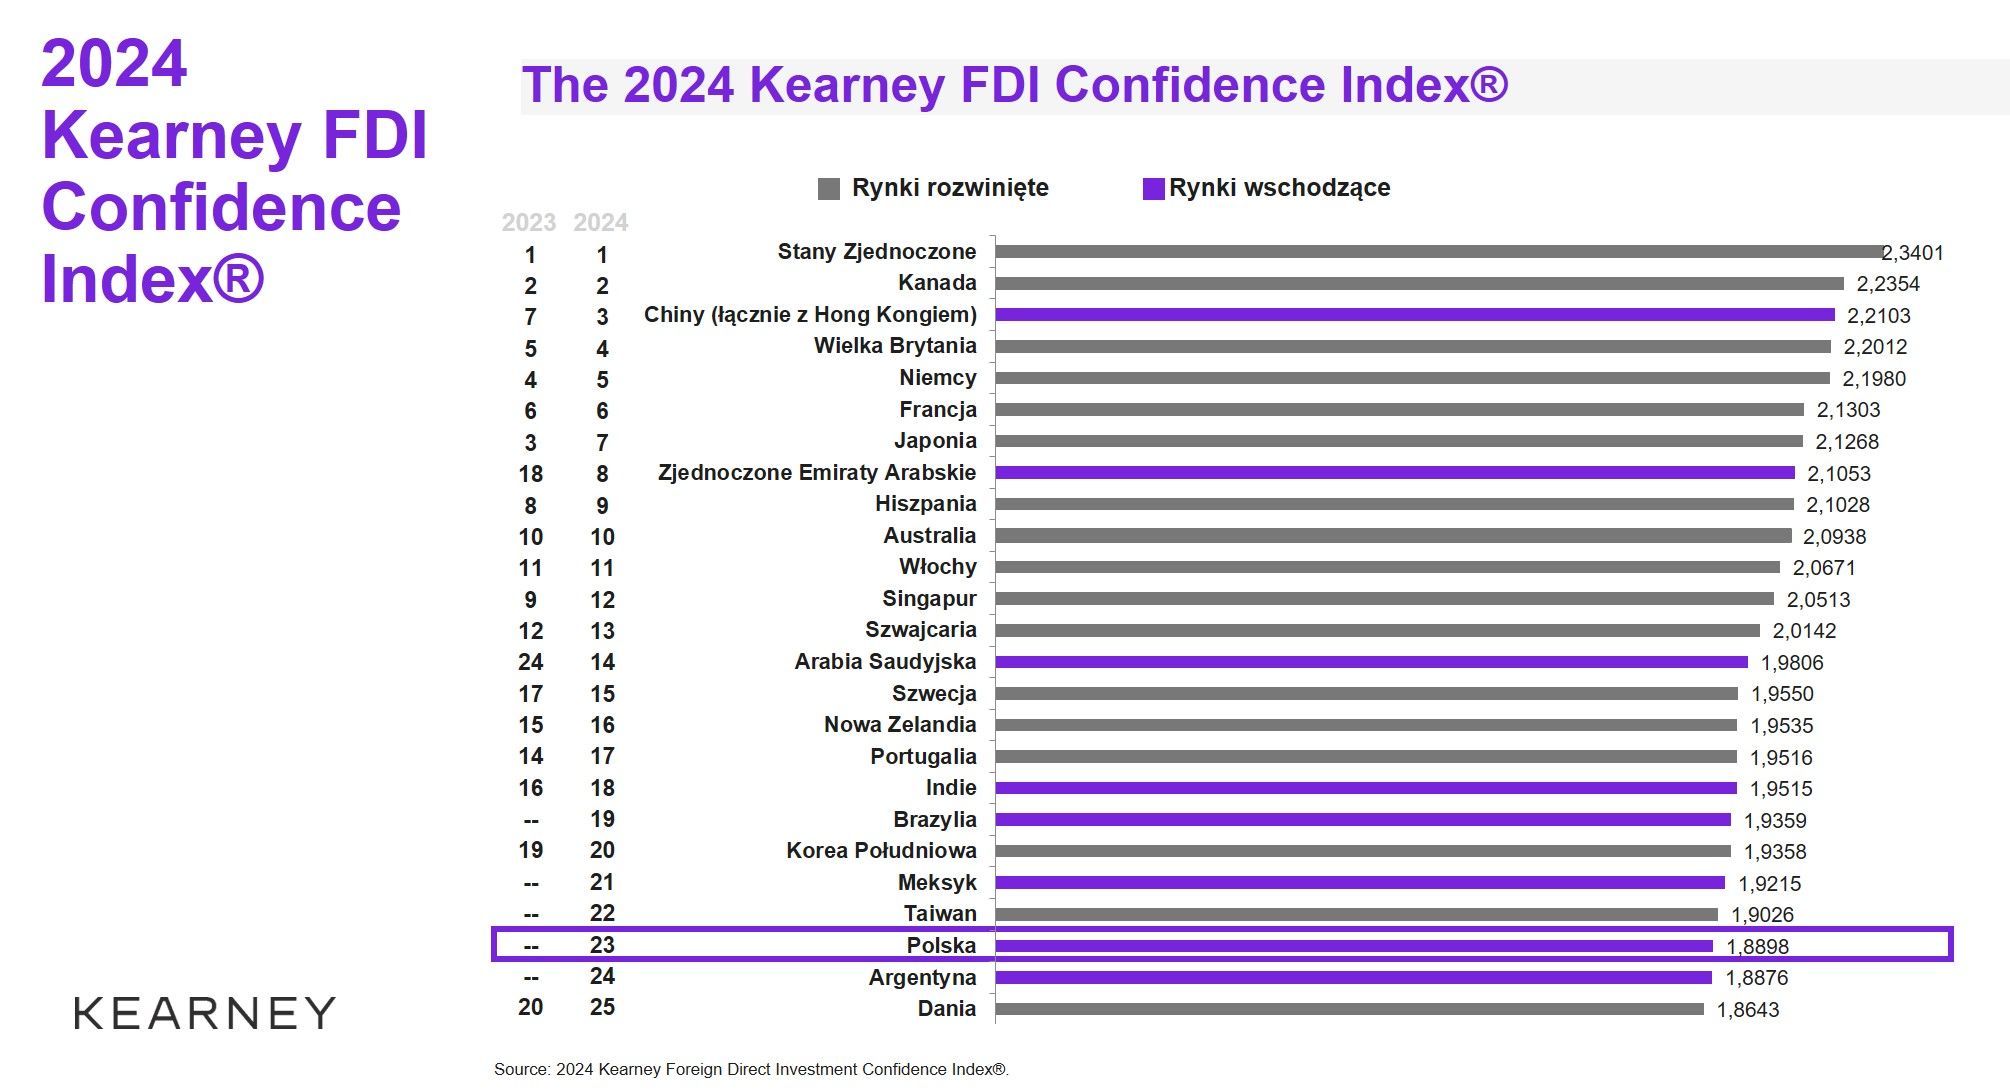 Kearney_FDI Confidence Index 2024.jpg